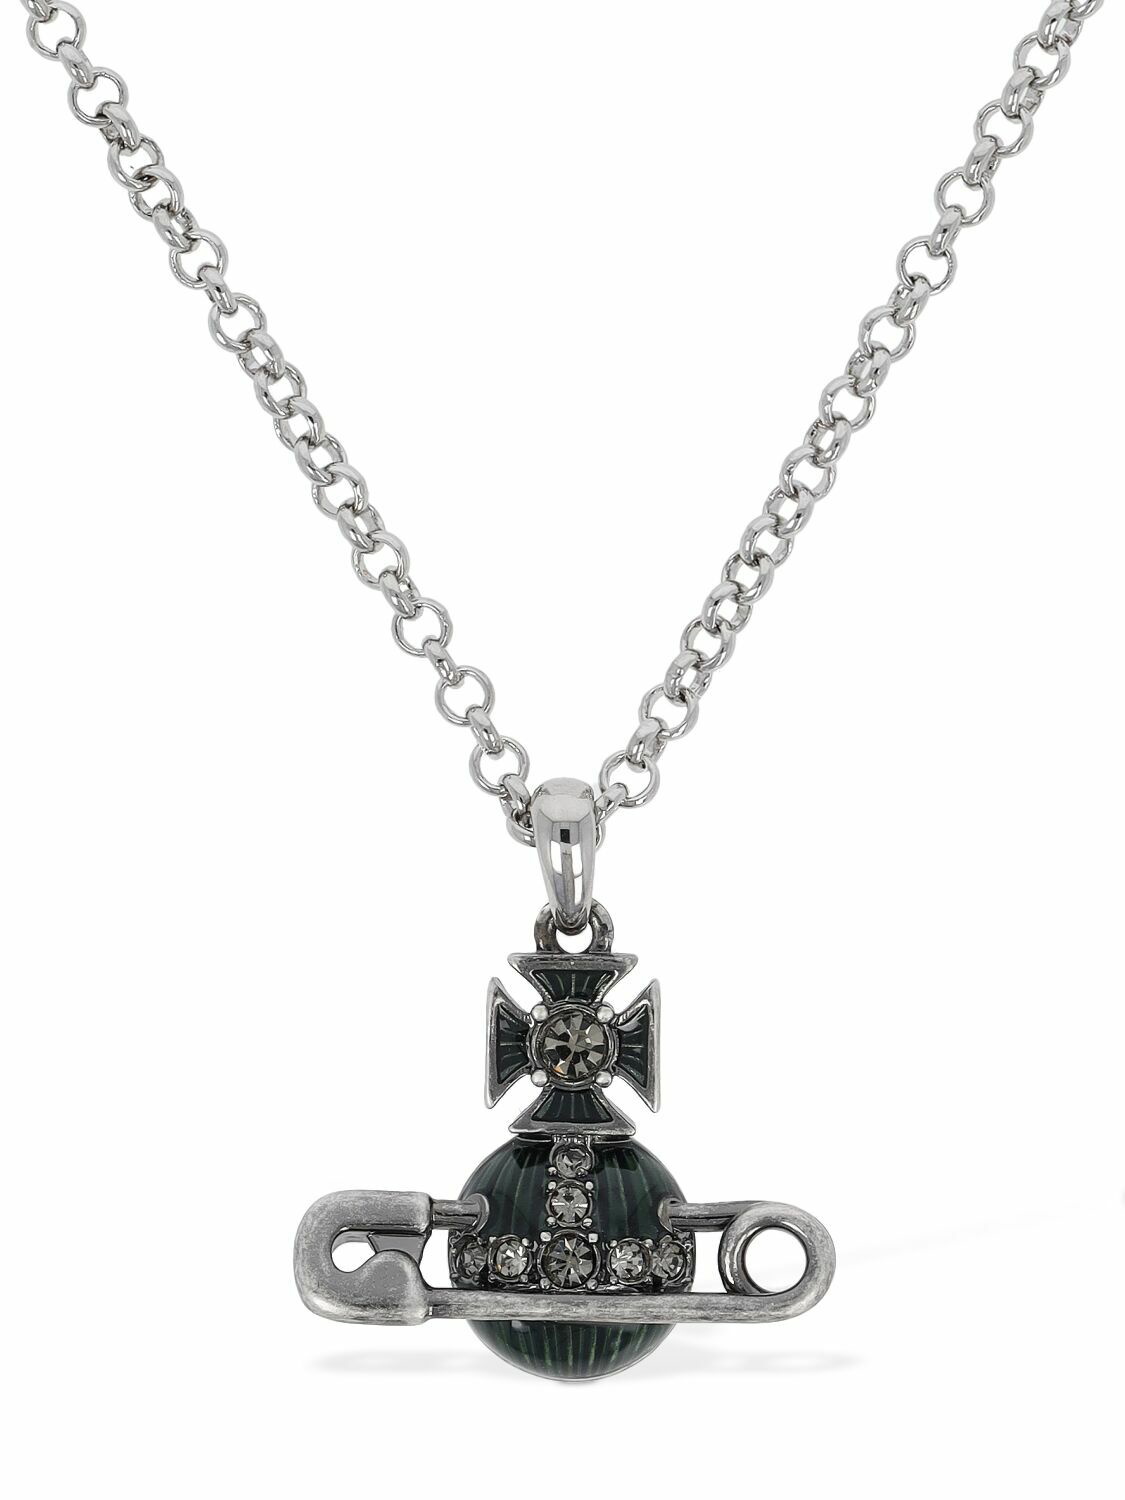 Diamond Novelty Necklaces & Pendants Inspired by Disney Princesses &  Villains | Enchanted Disney Fine Jewelry